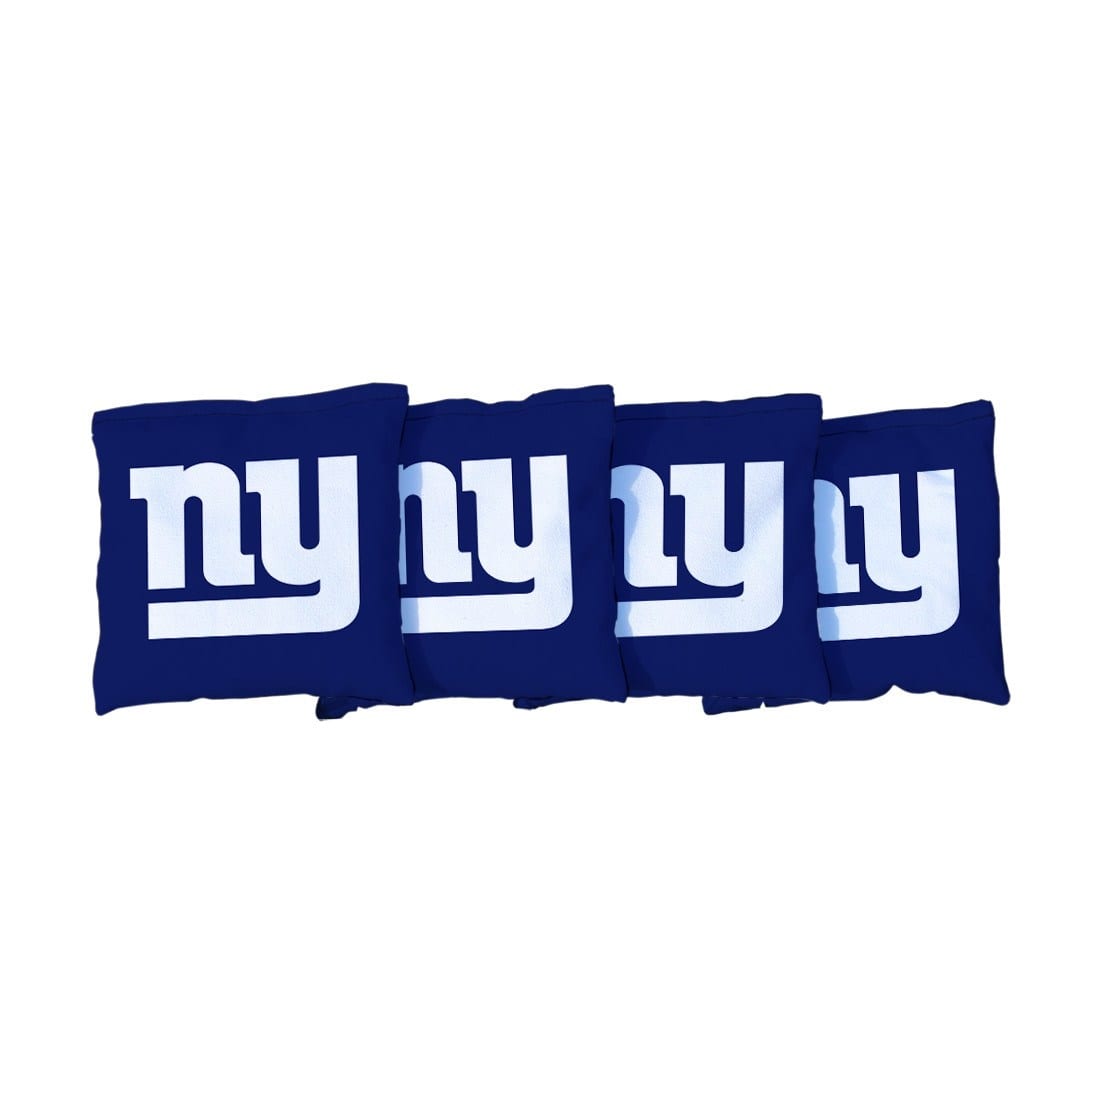 New York Giants NFL Blue Cornhole Bags